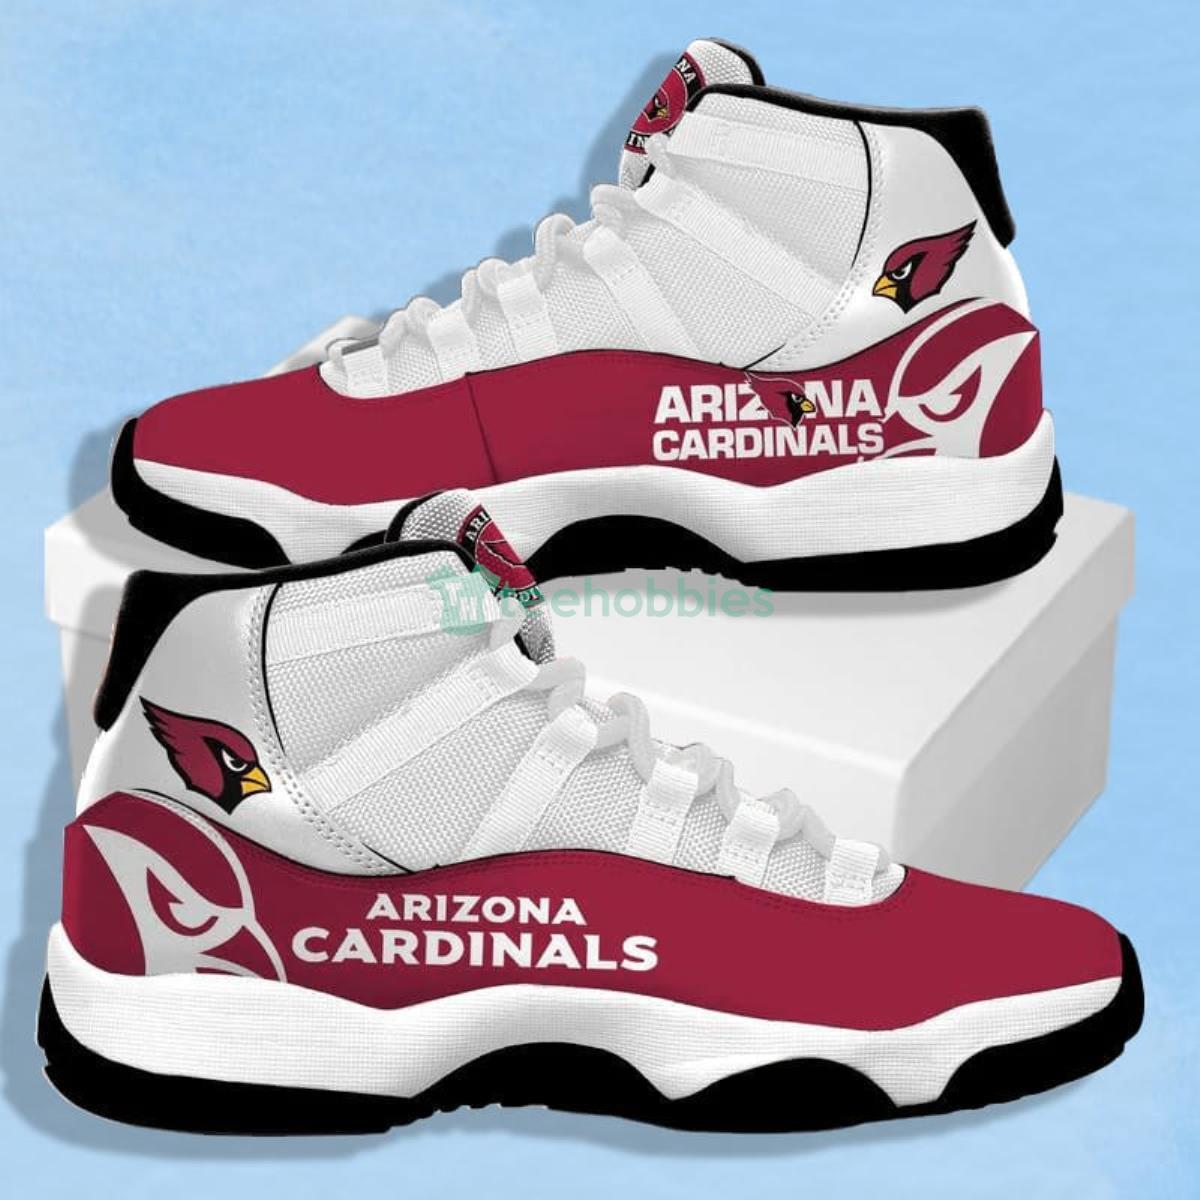 Arizona Cardinals Impressive Design Air Jordan 11 Shoes Product Photo 1